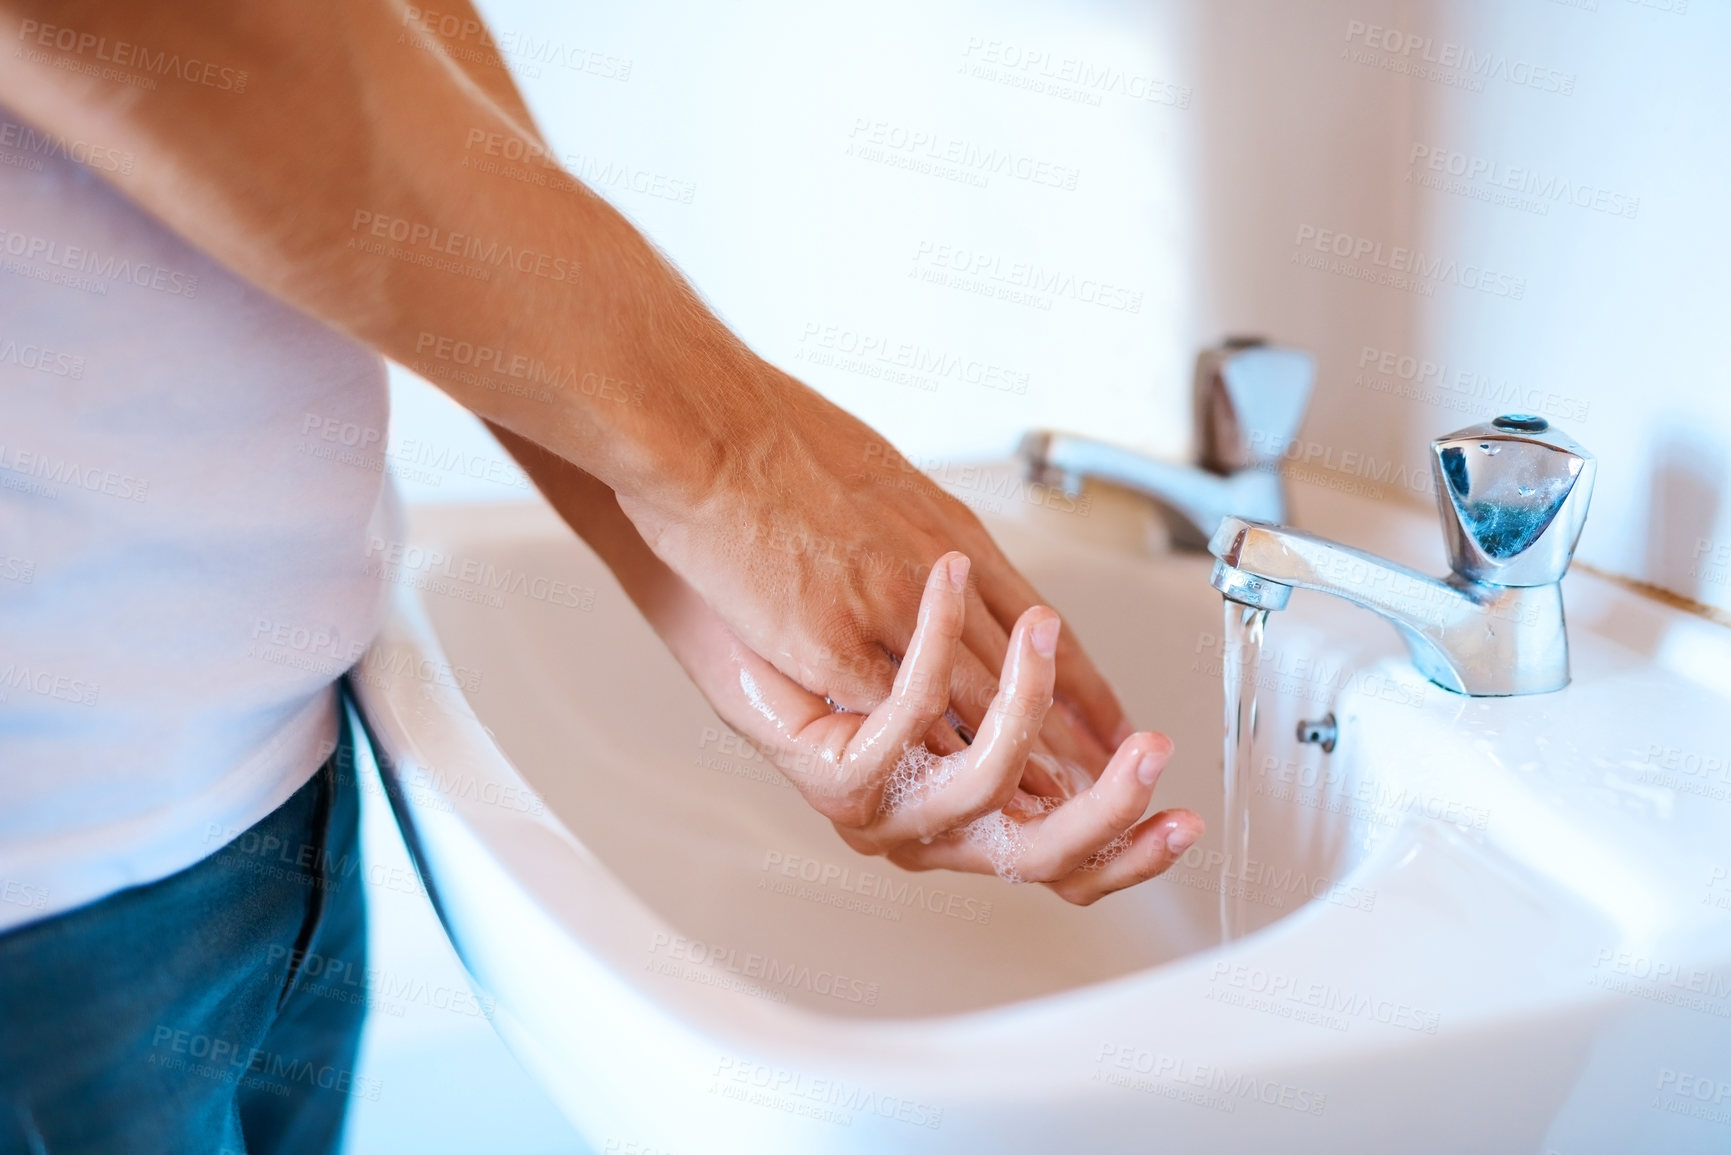 Buy stock photo Closeup shot of an unrecognizable man washing his hands at a basin